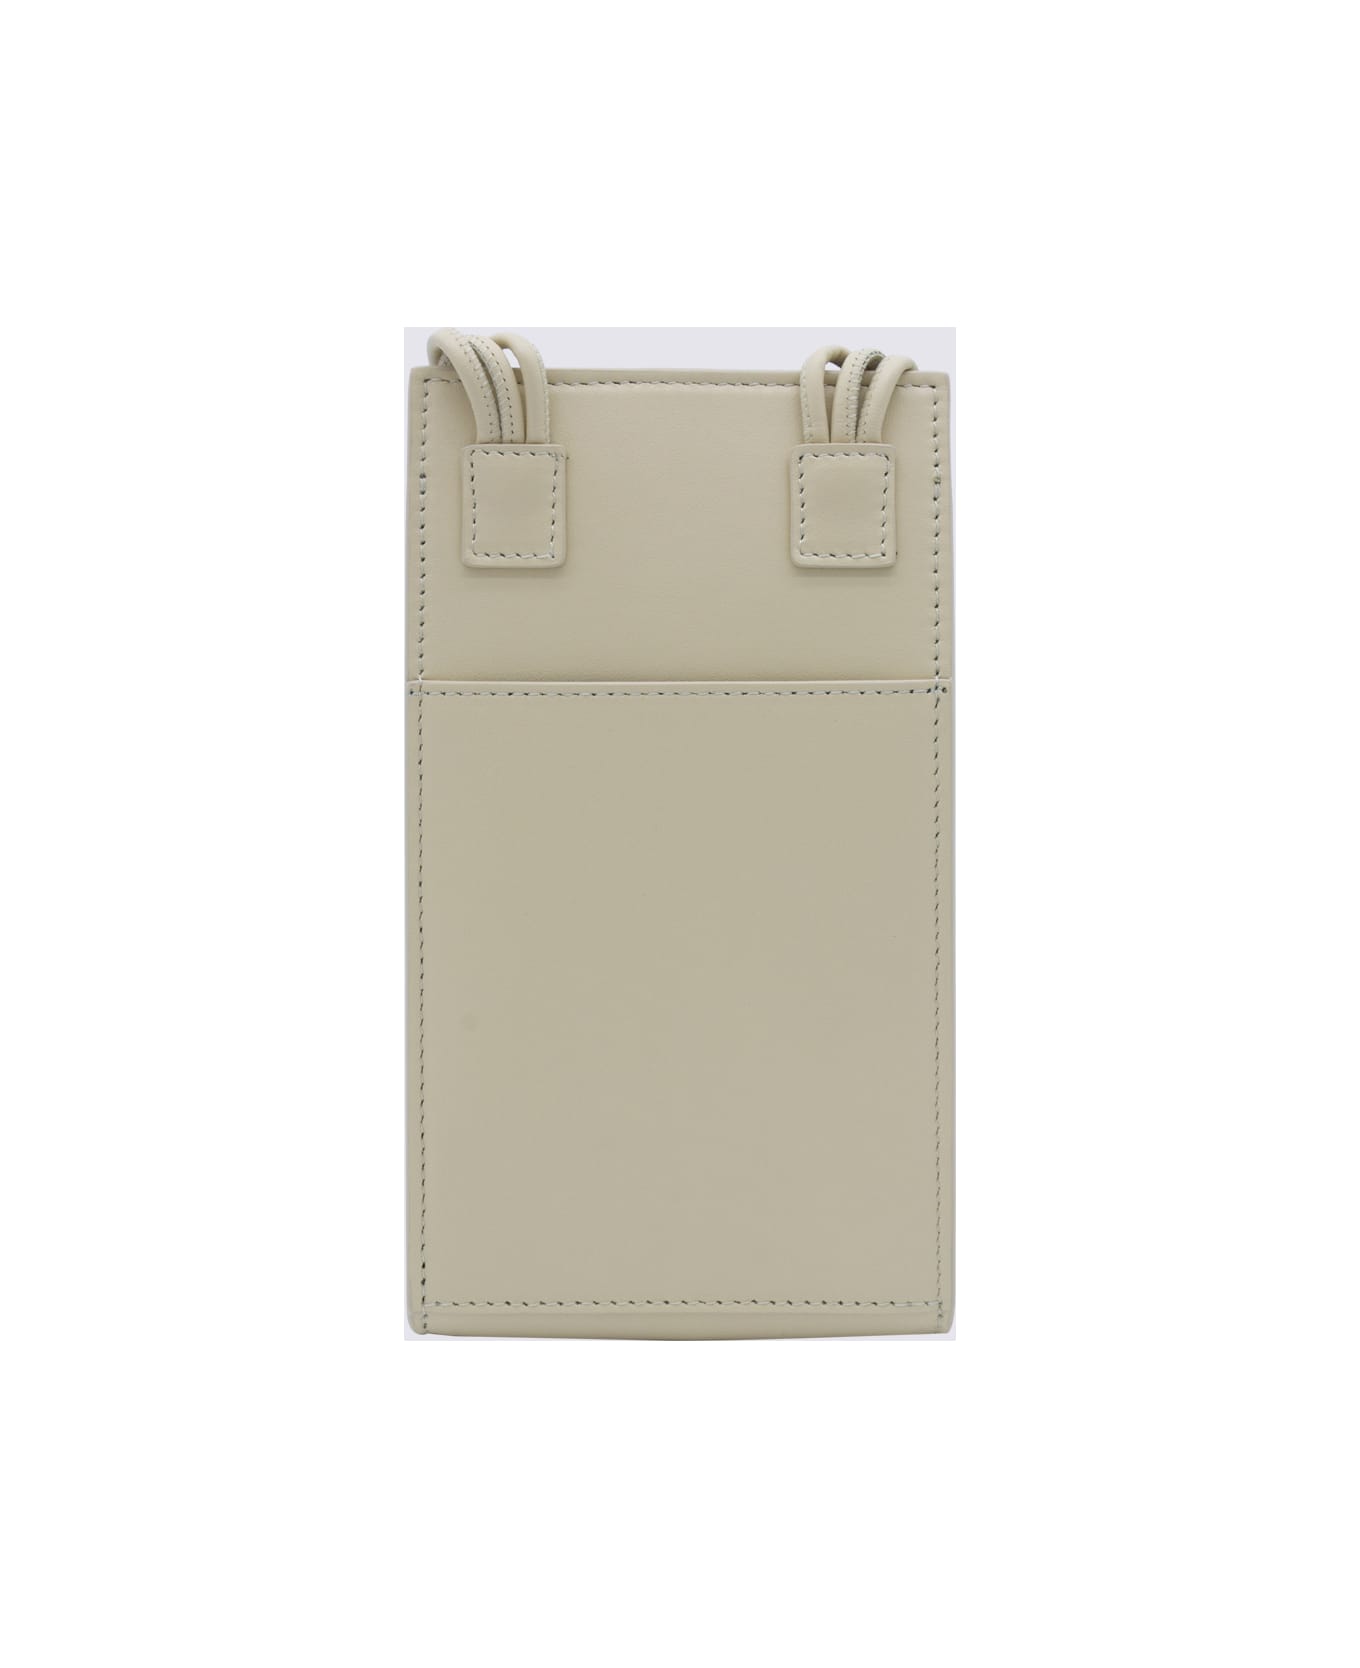 Jil Sander Light Cream Leather Phone Case - LIGHT CREAM